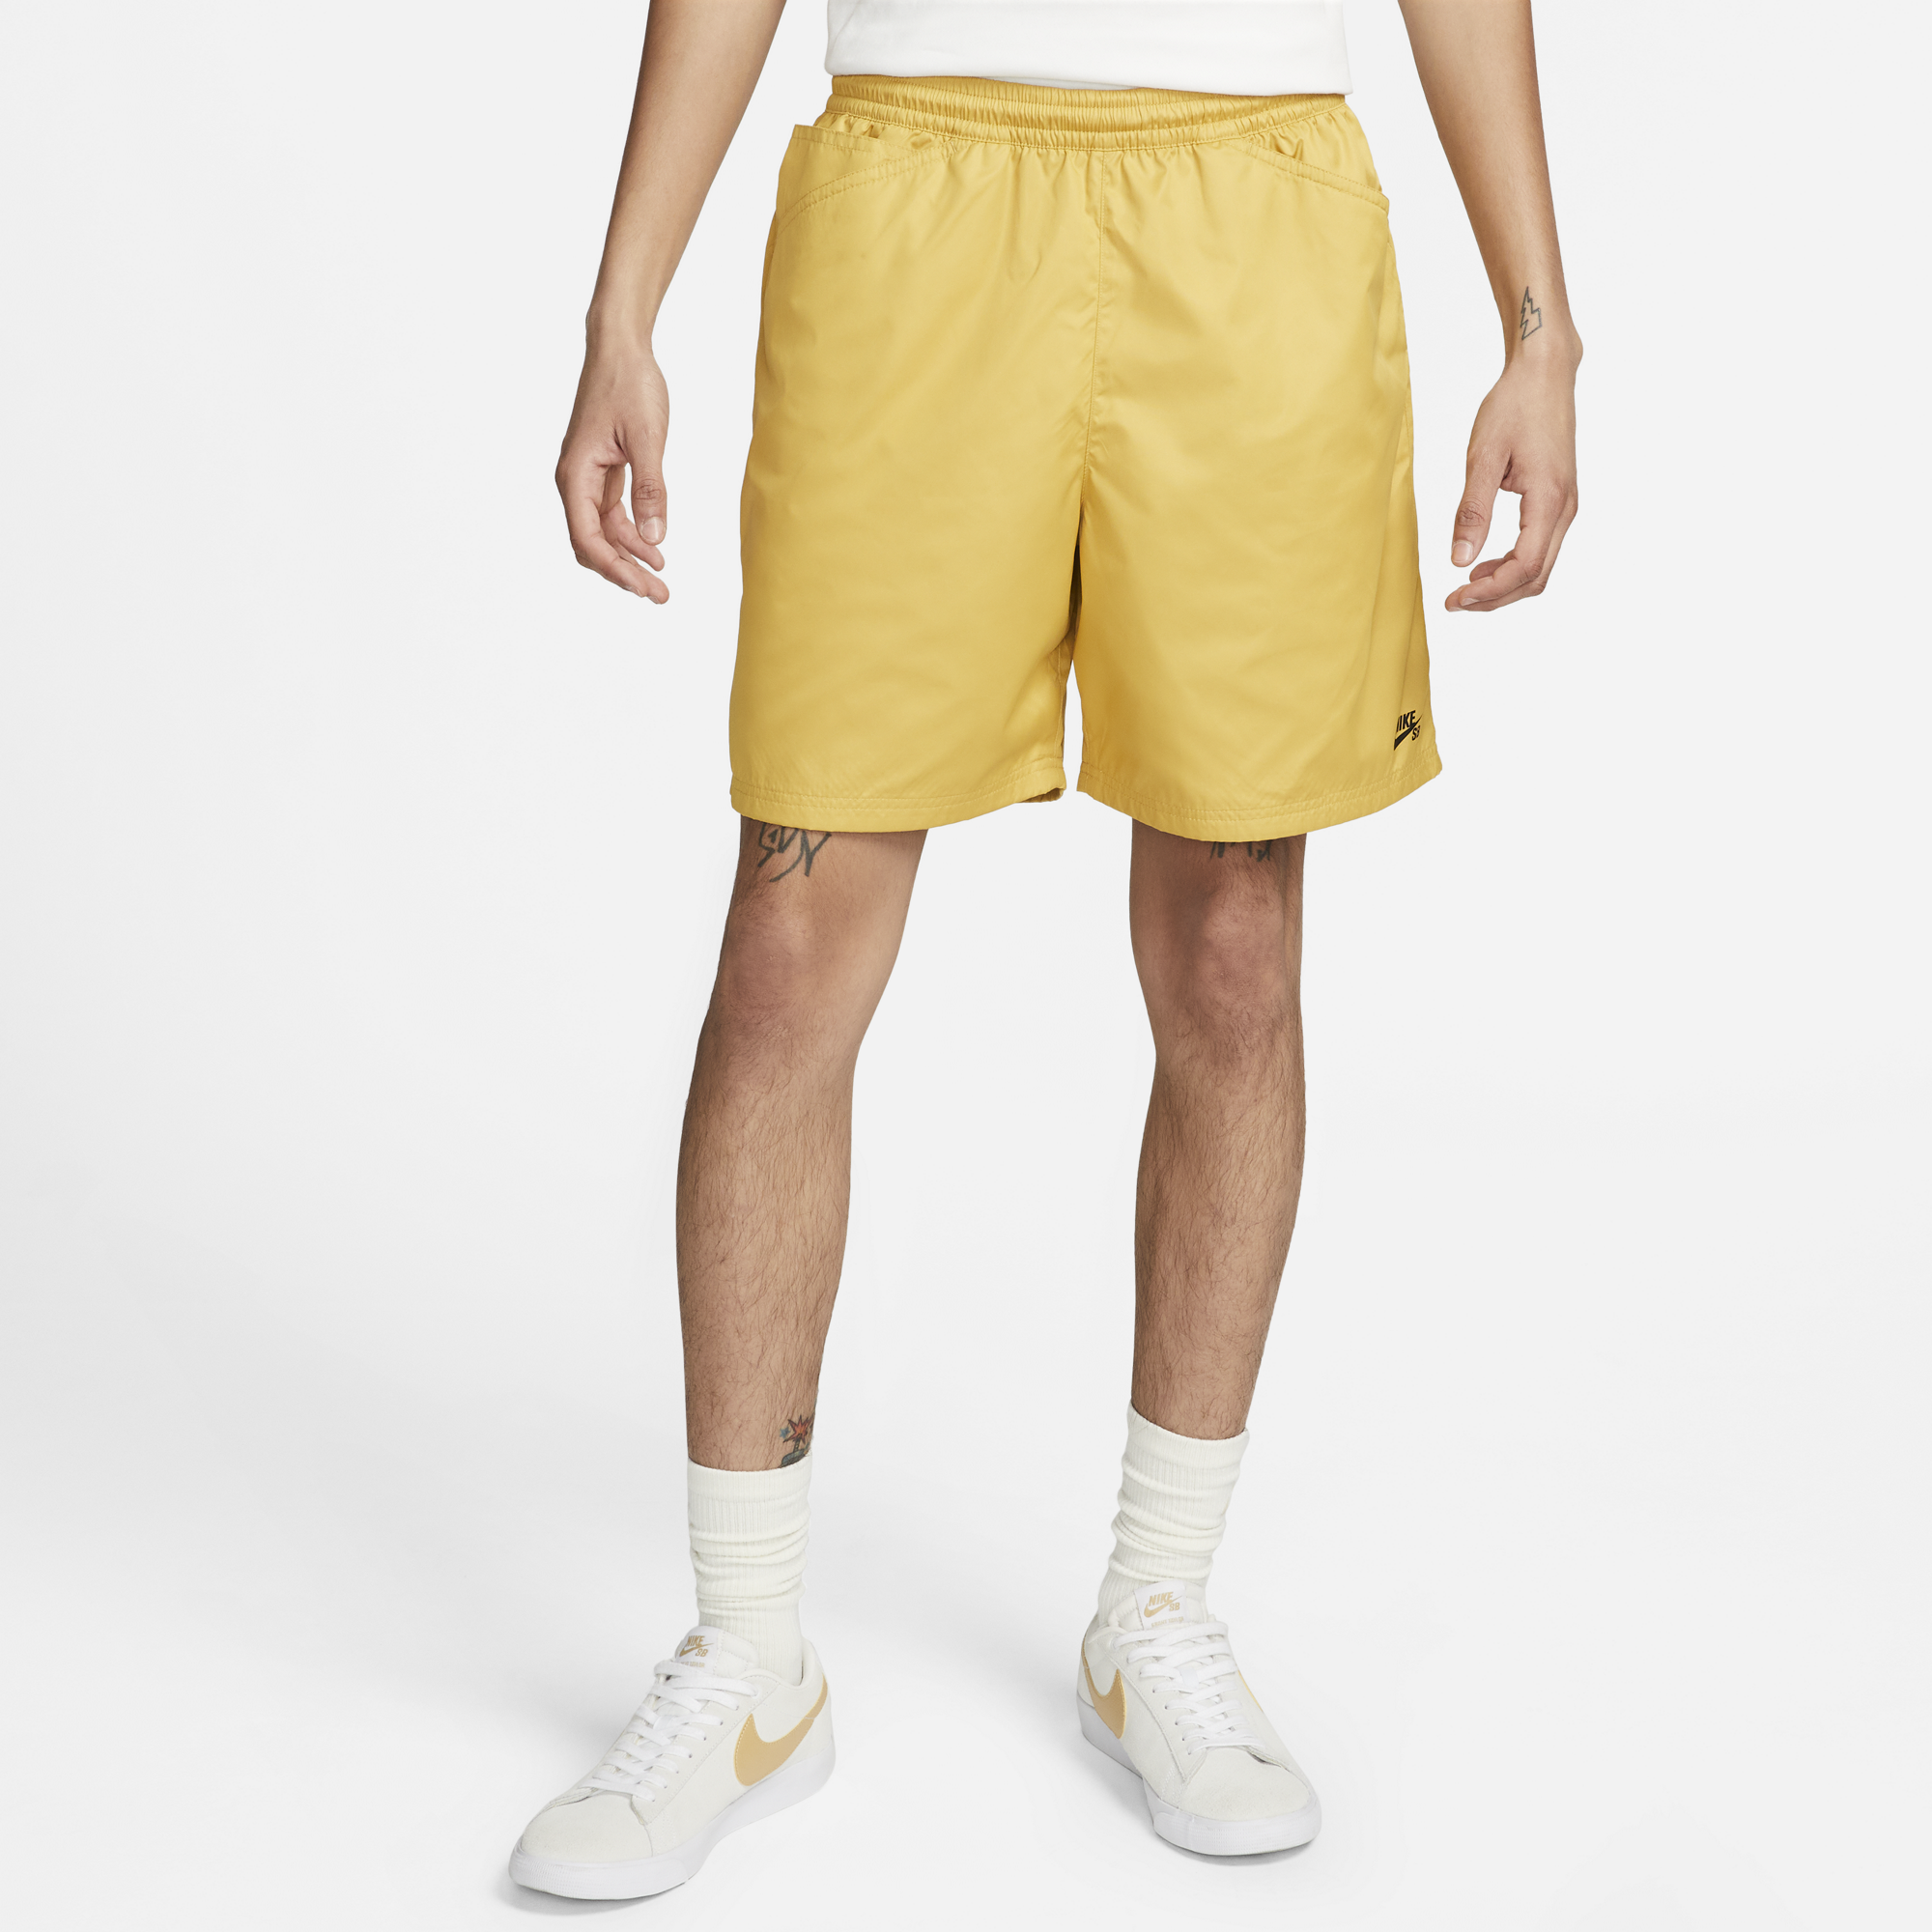 Nike SB Chino Shorts Sanded Gold/Black